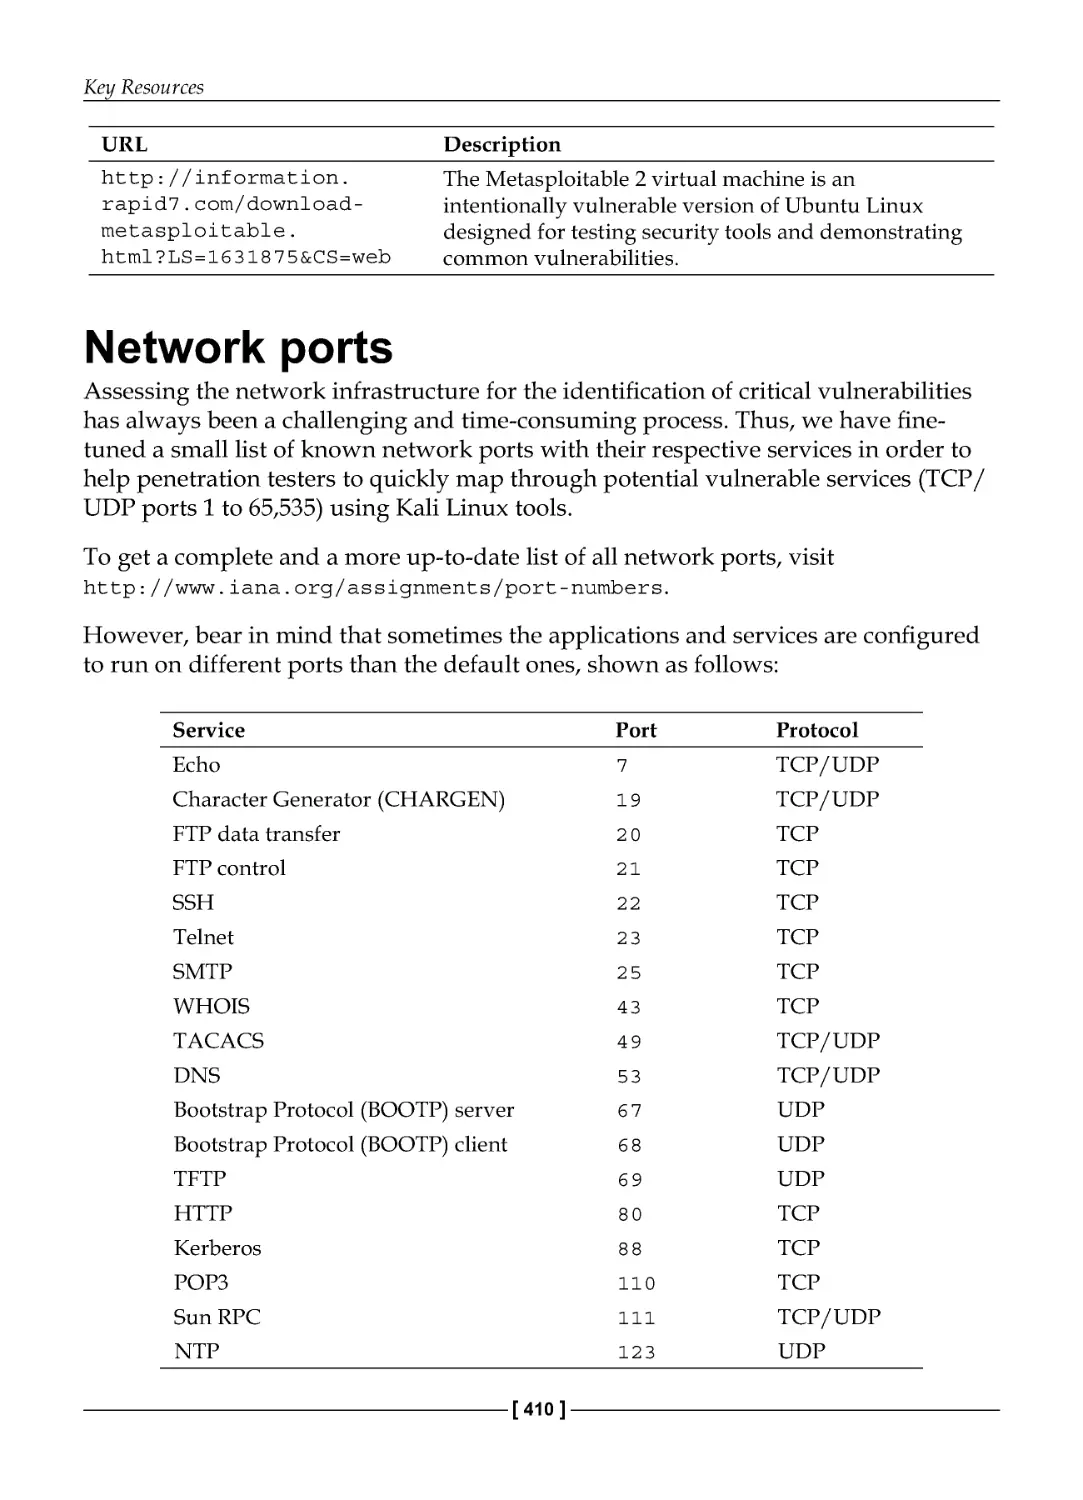 Network ports